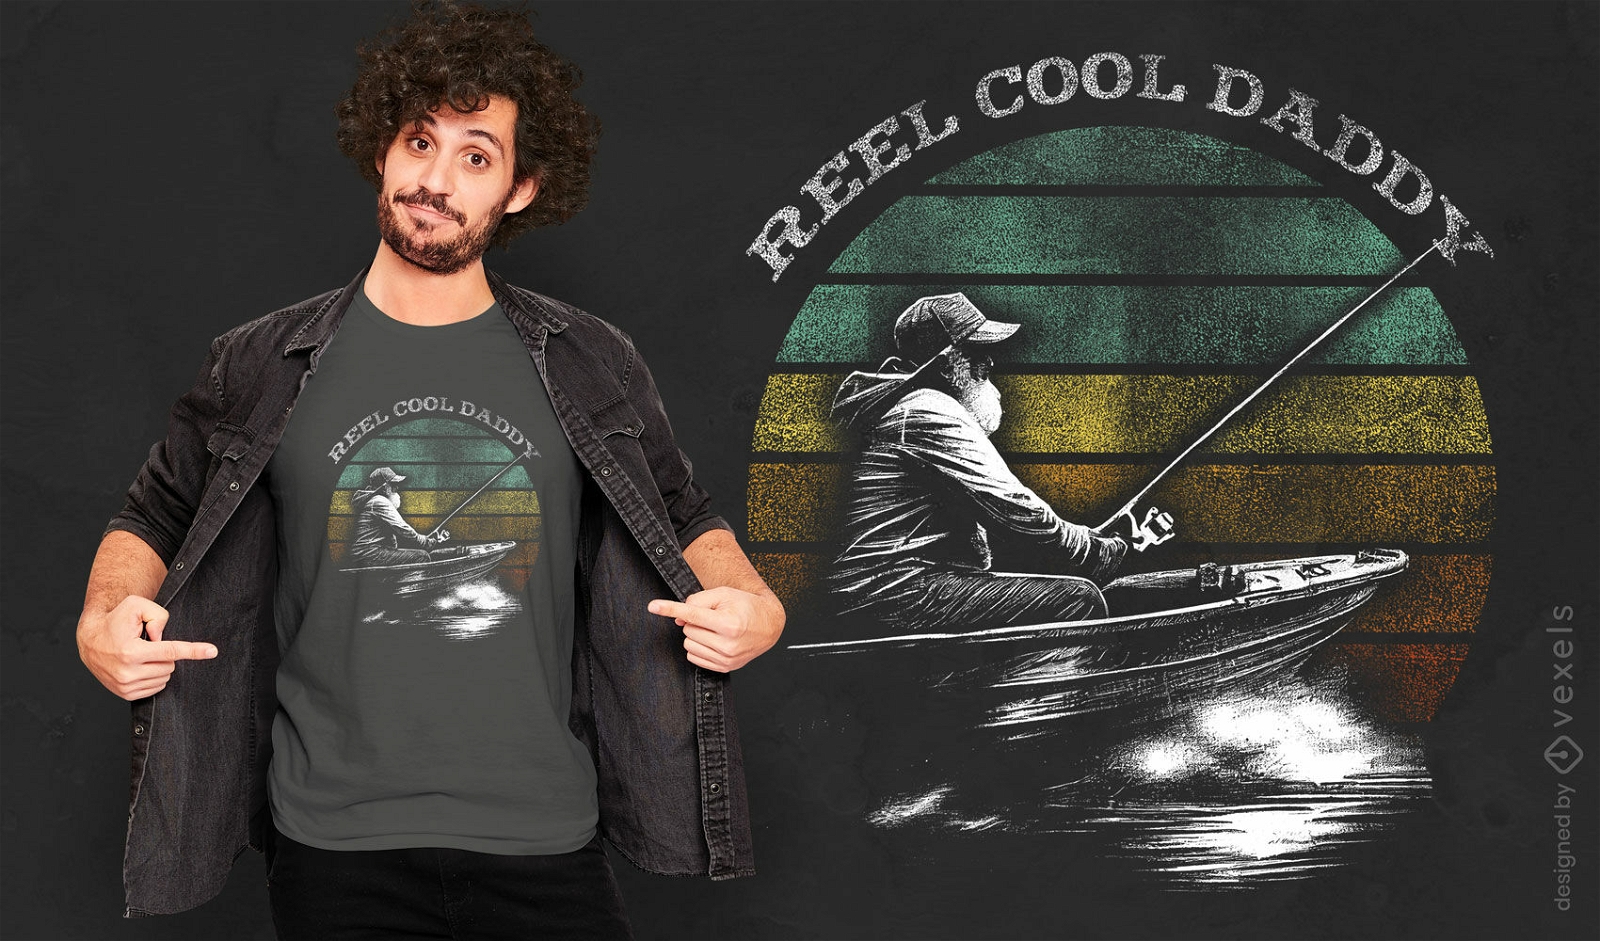 Fishing quote boat t-shirt design